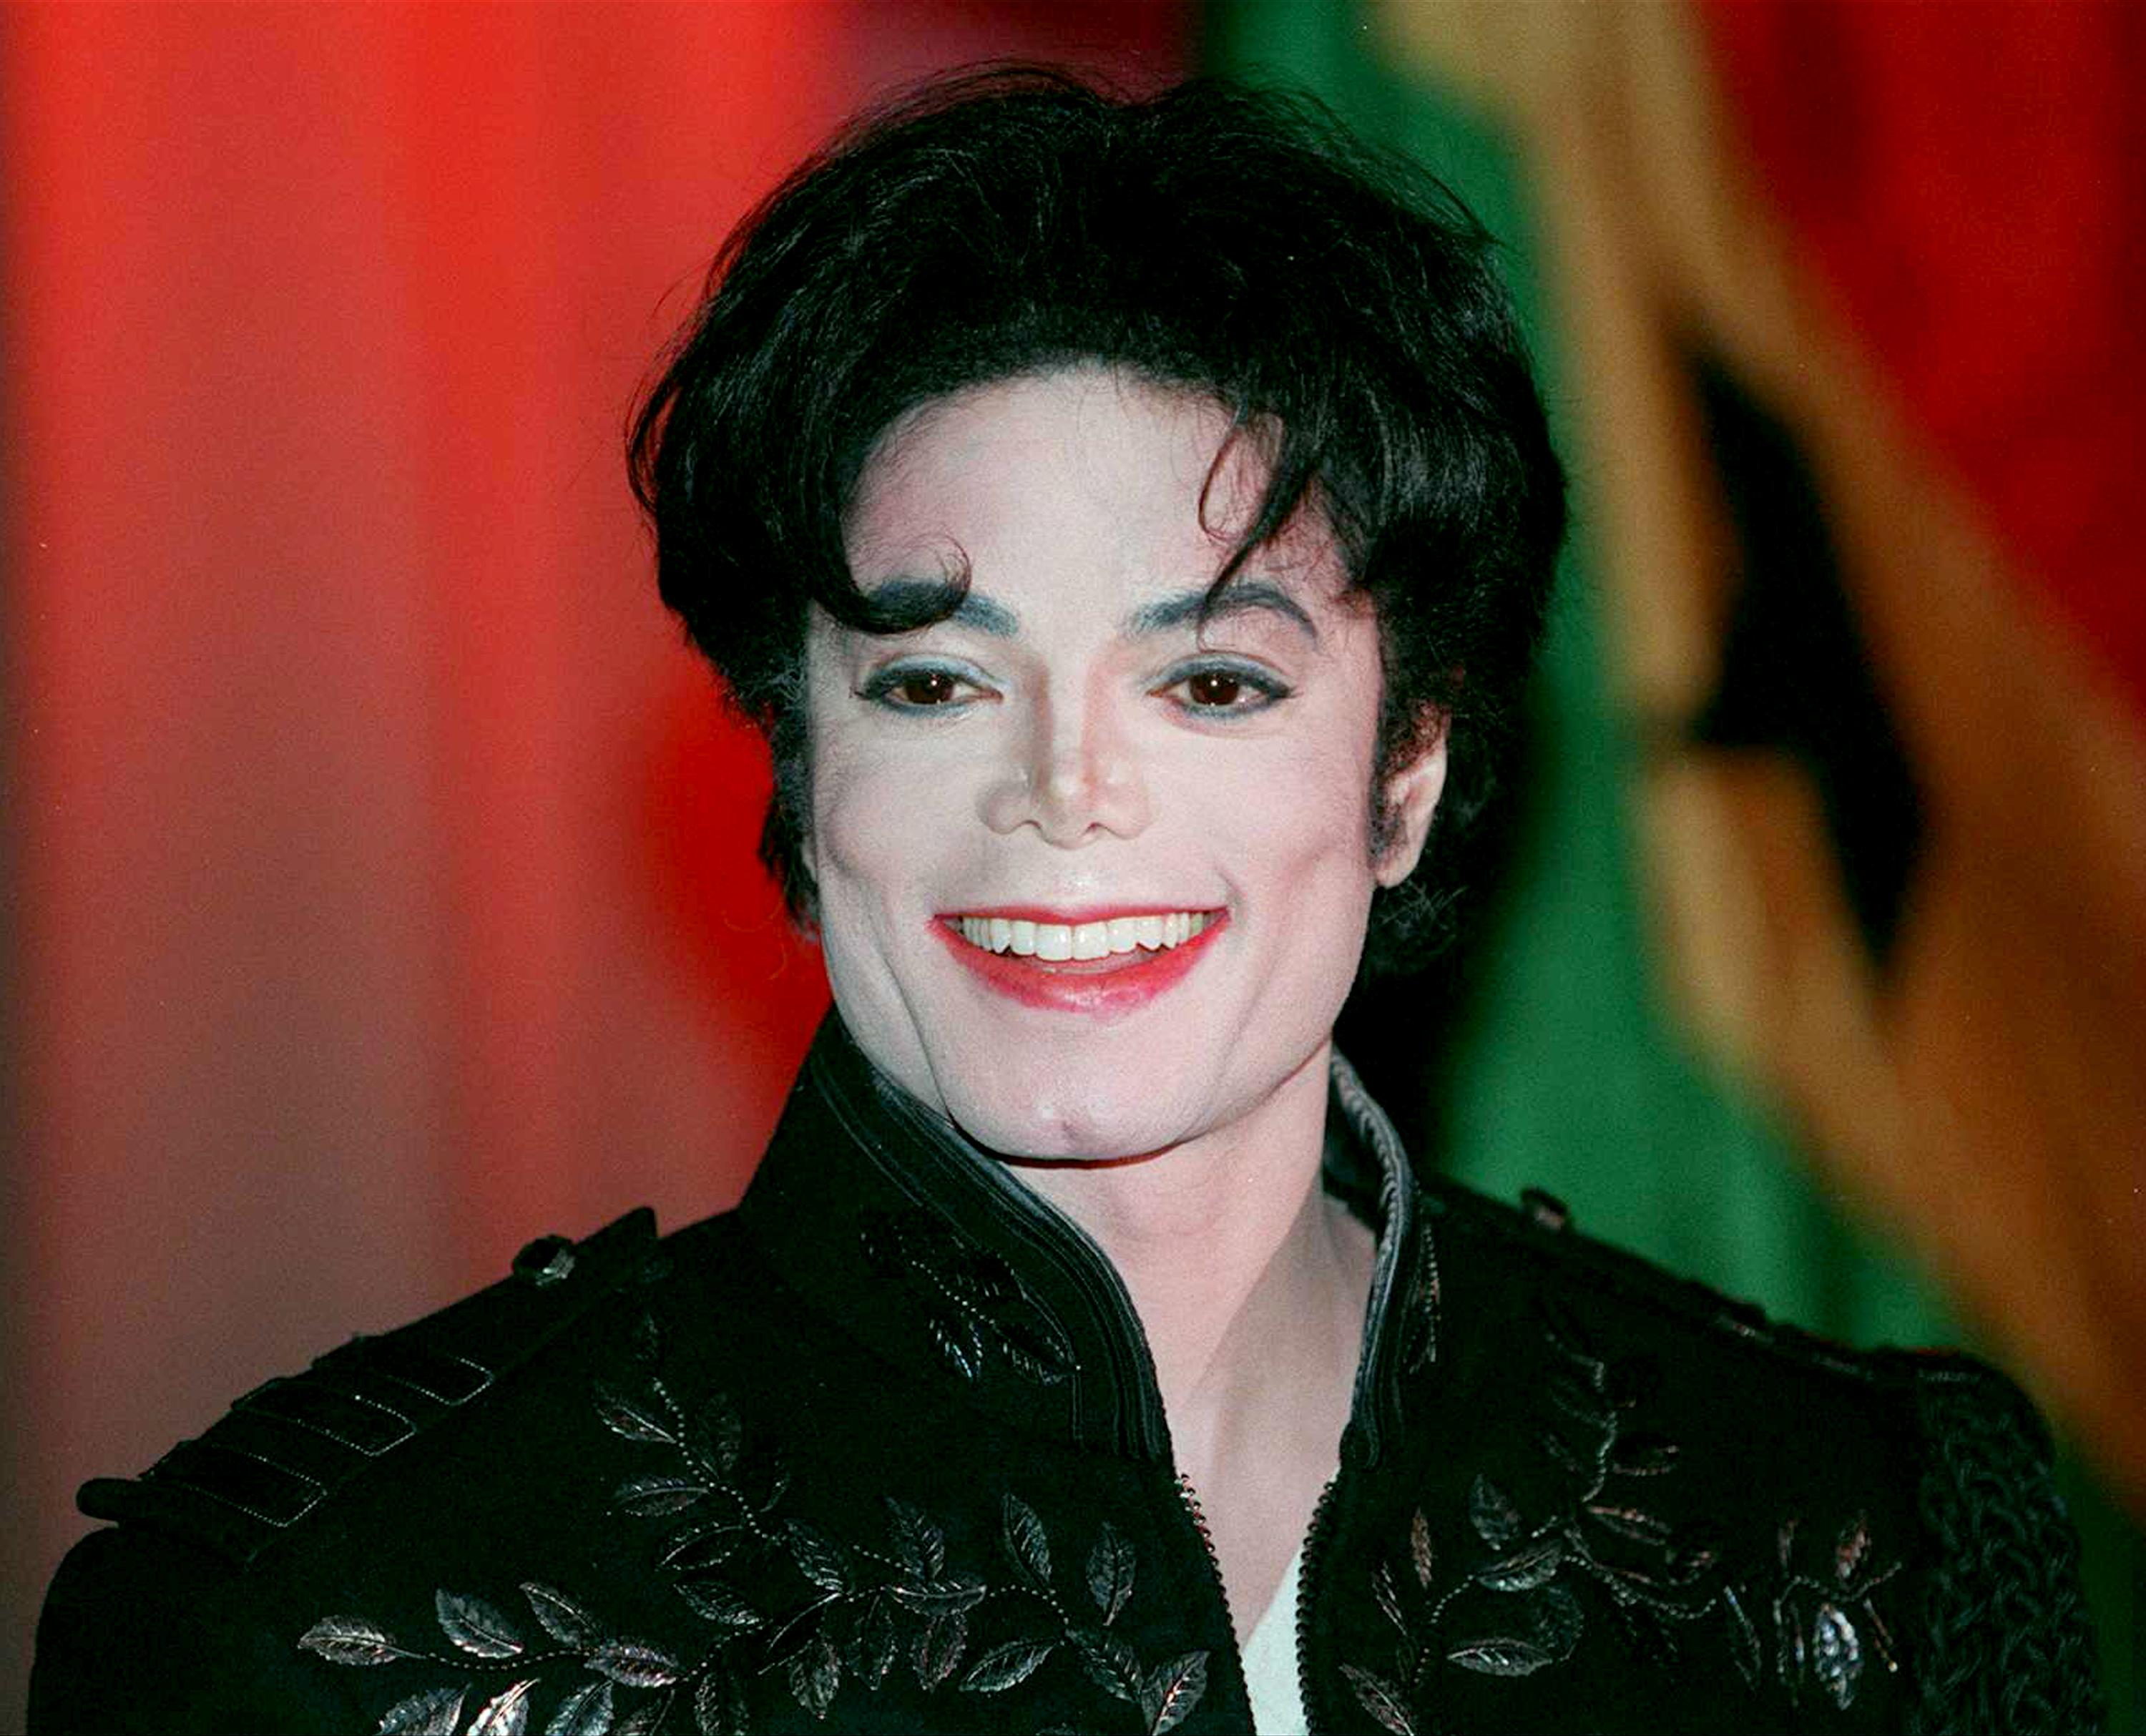 Michael Jackson im Jahr 1995 | Quelle: Getty Images